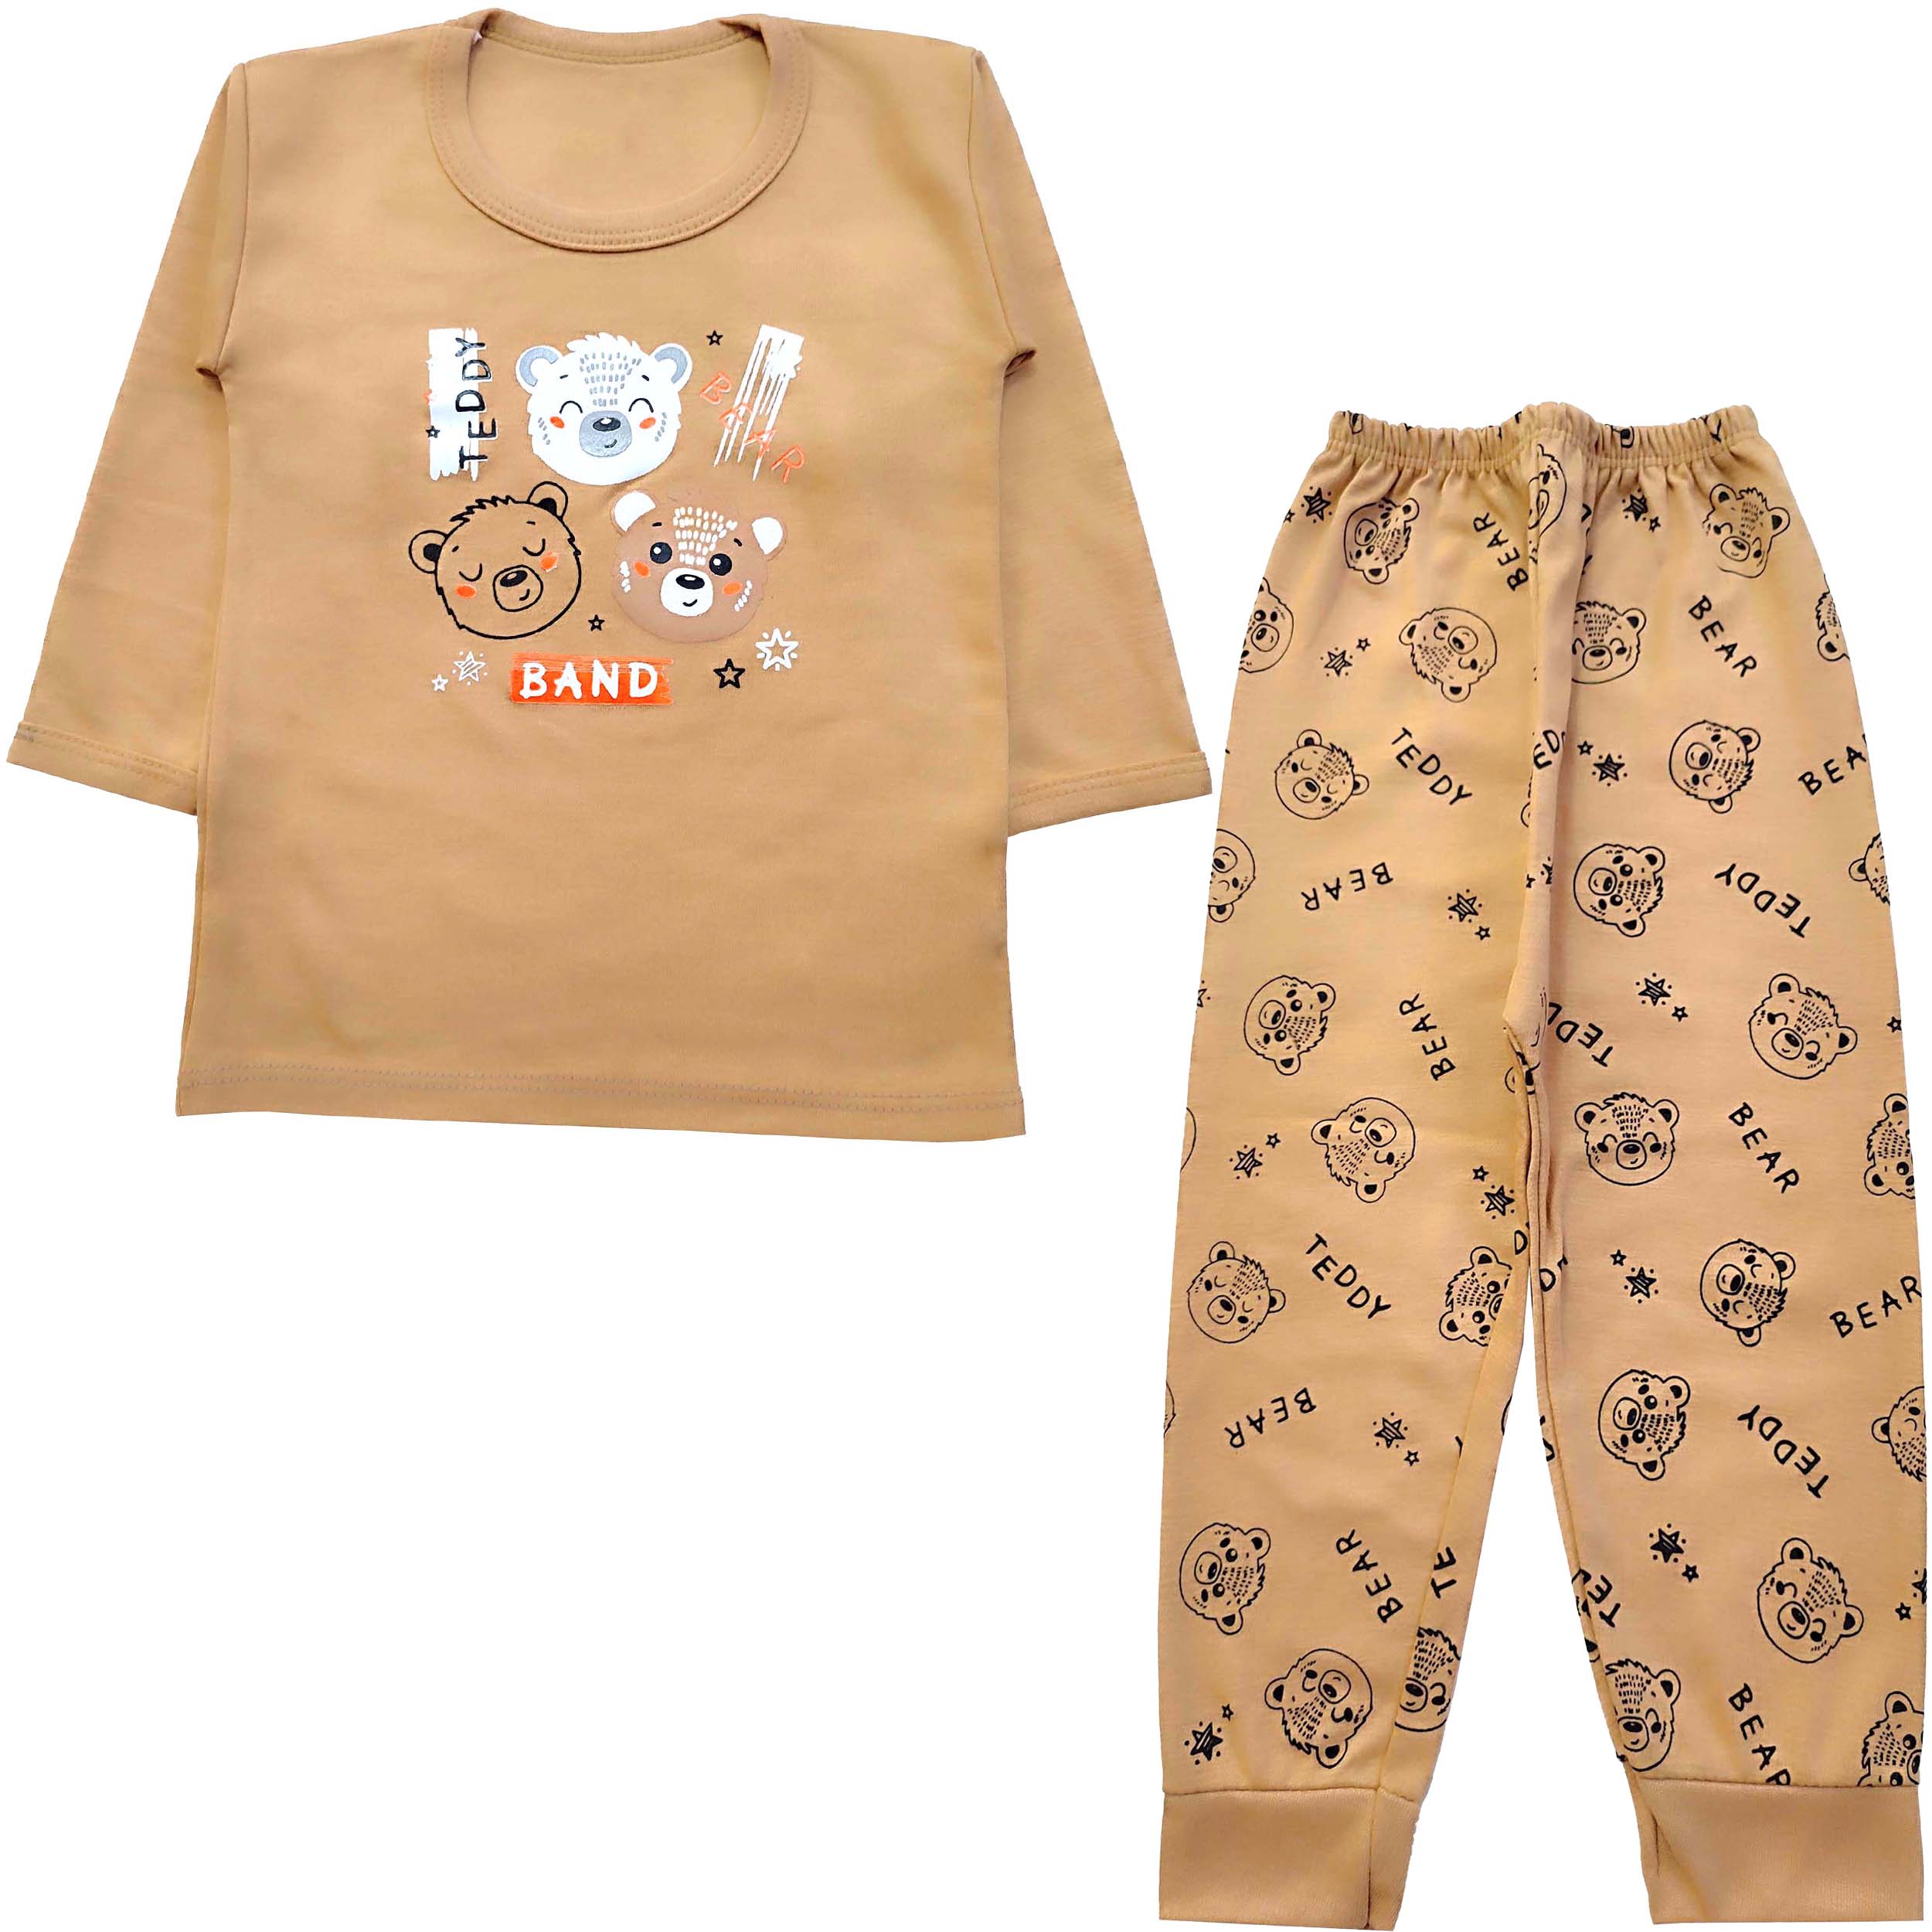 ست تی شرت و شلوار نوزادی مدل کله خرس کد 3927 رنگ نسکافه ای -  - 3